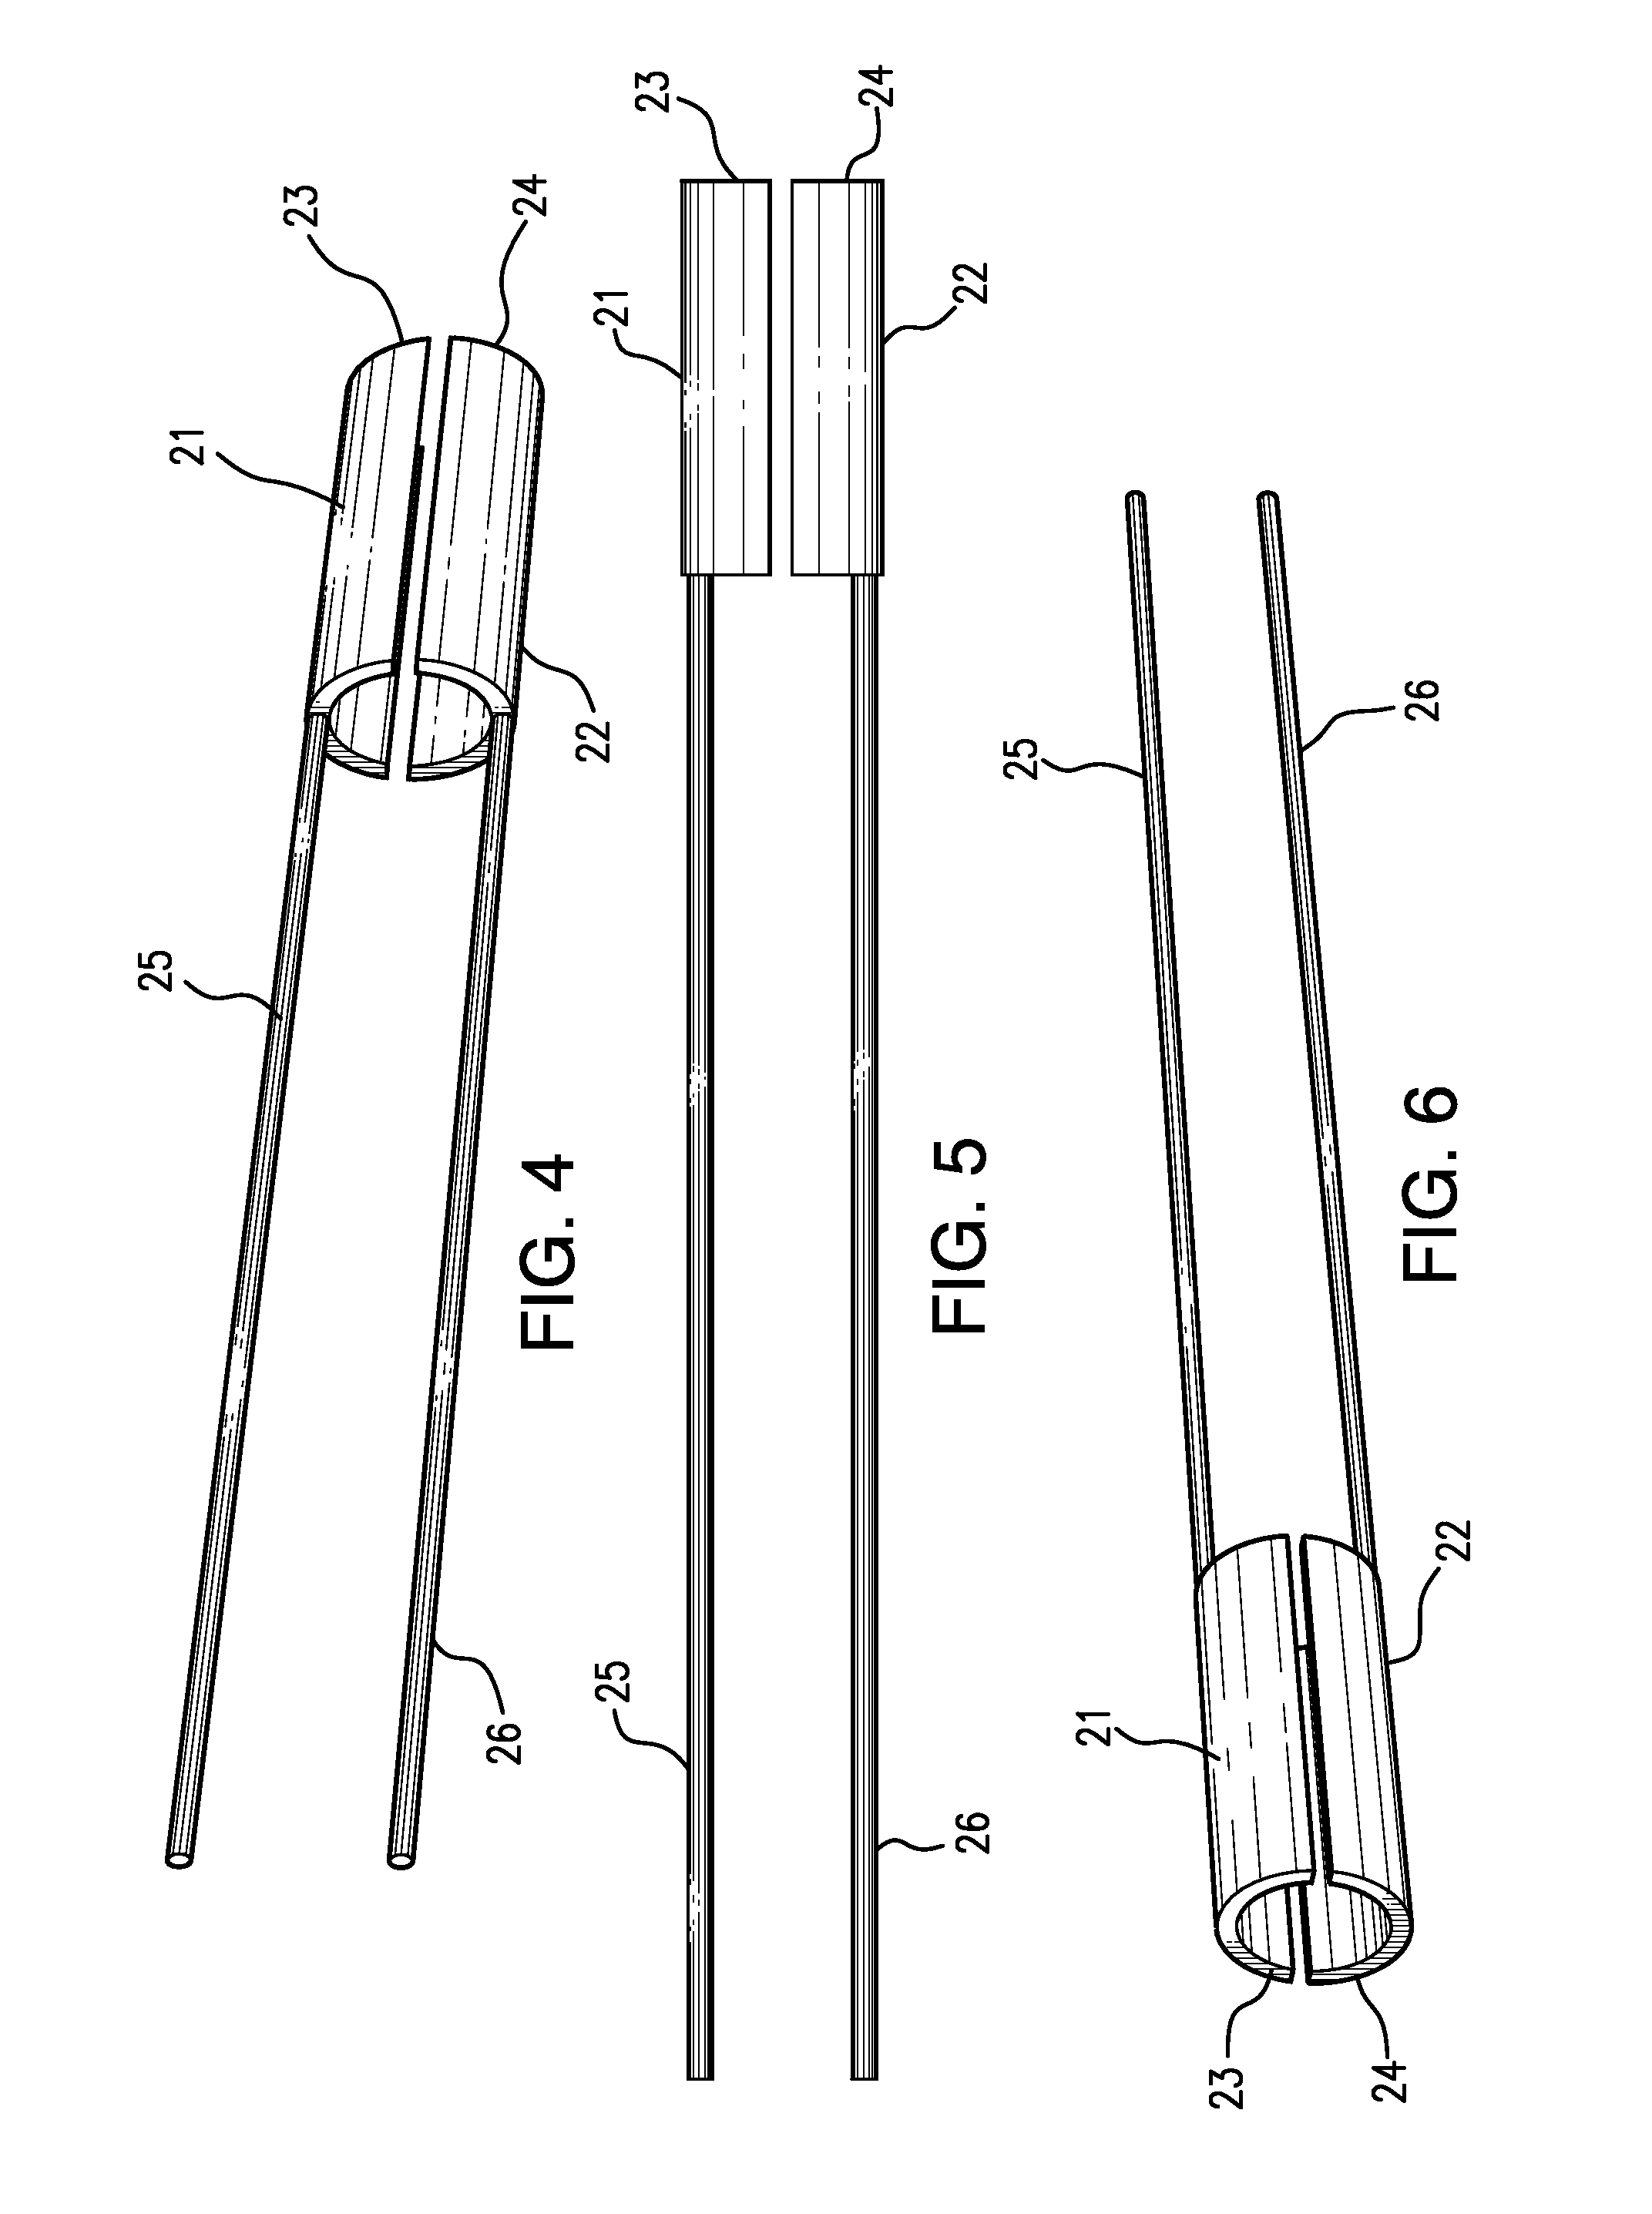 Sleeve piston for actuating a firearm bolt carrier